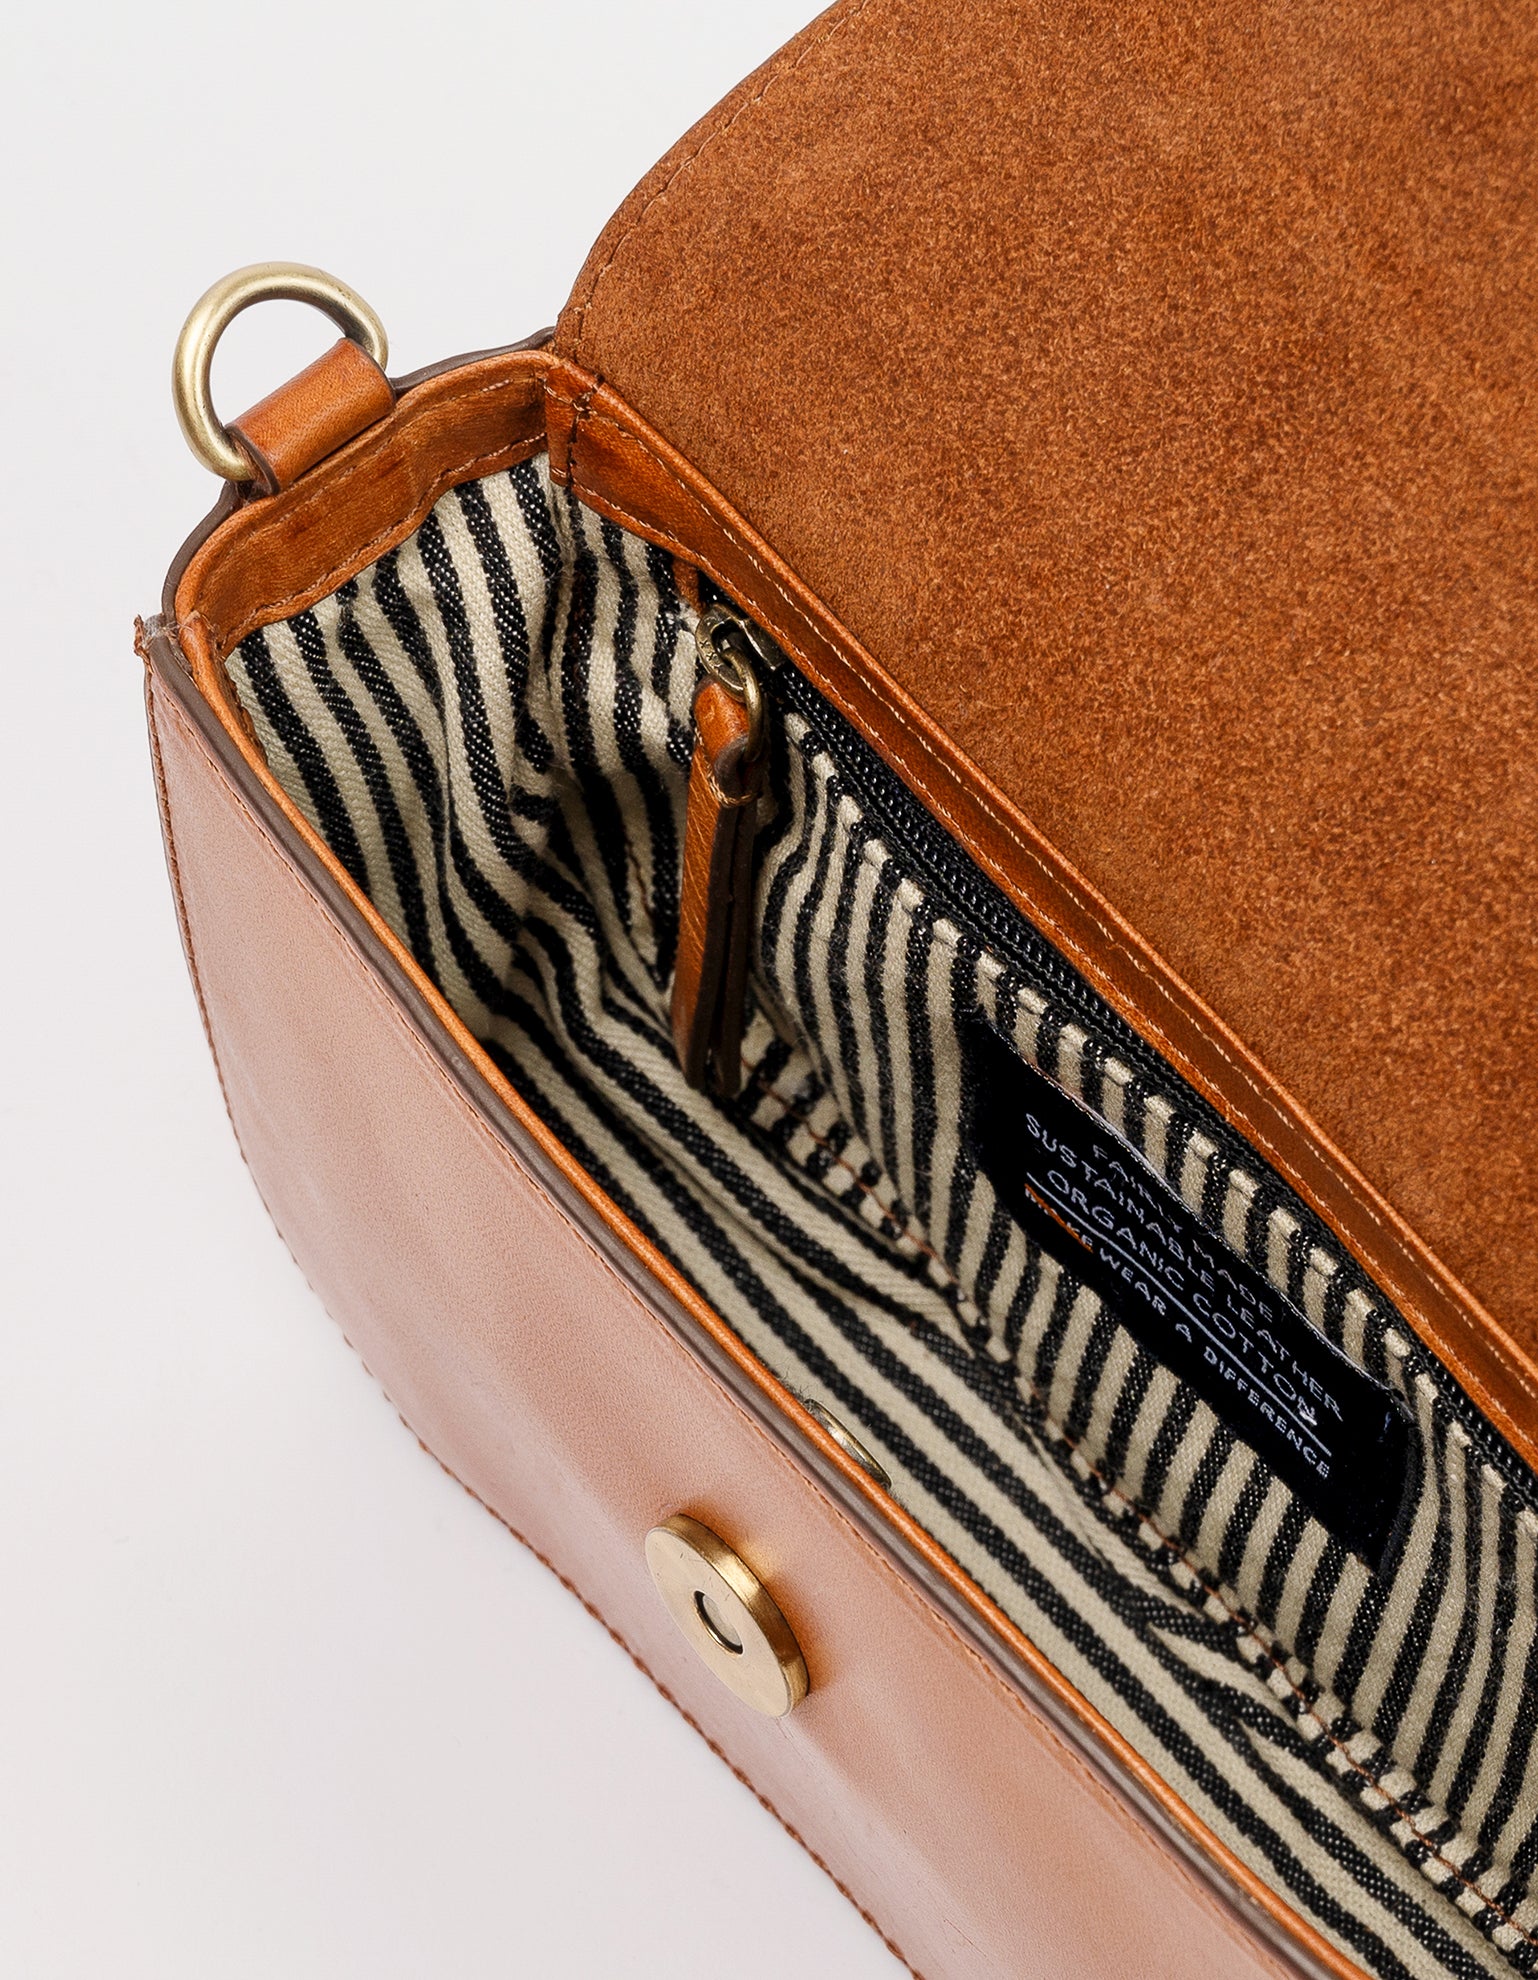 Nano Bag Cognac Classic Leather. Small clutch handbag, party bag. Inside product image.